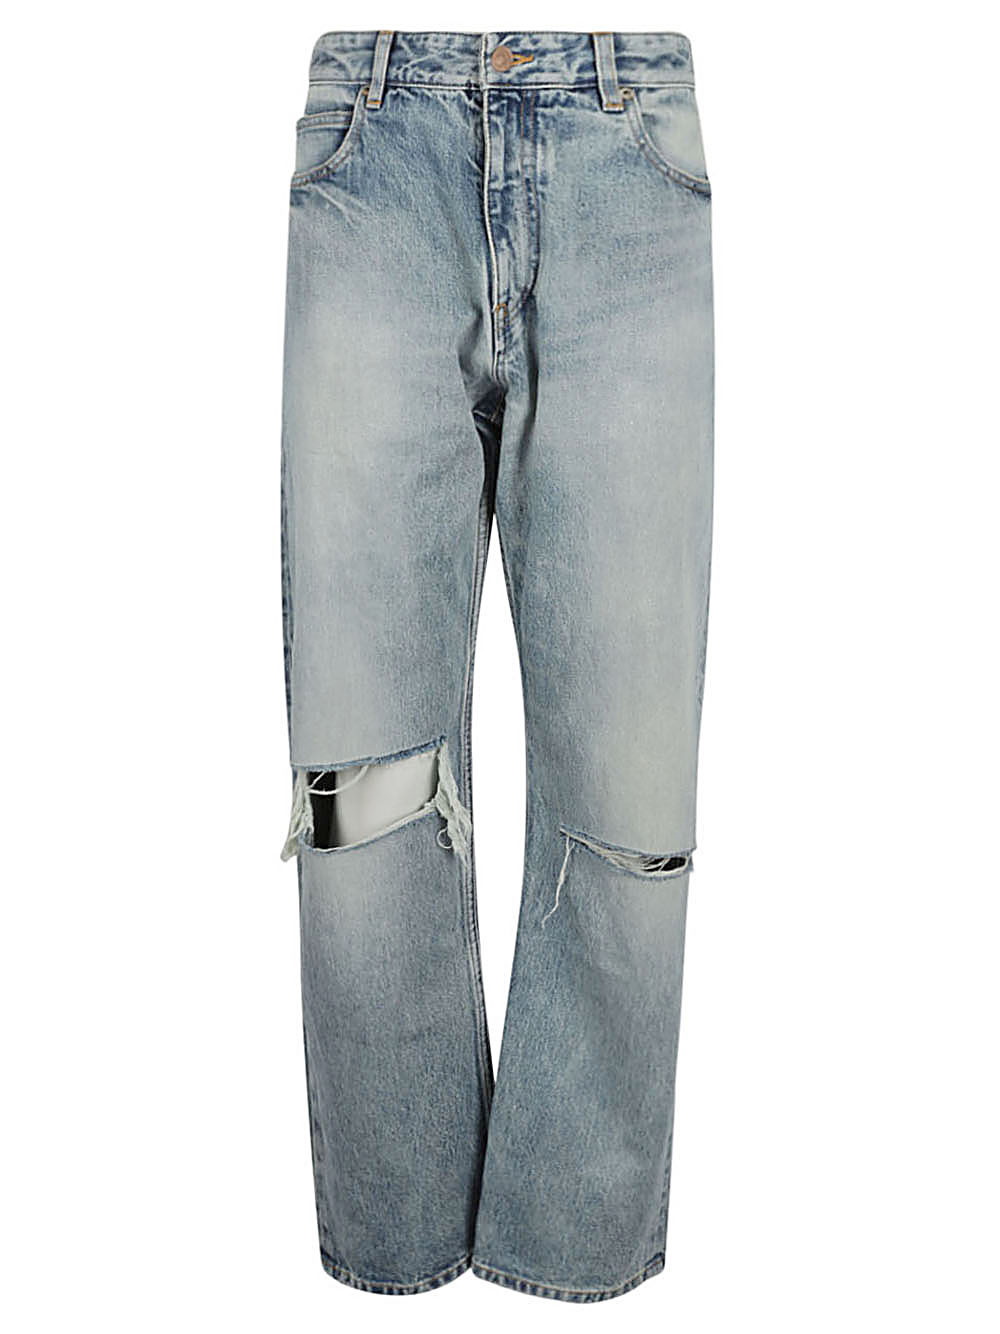 Organic cotton denim jeans